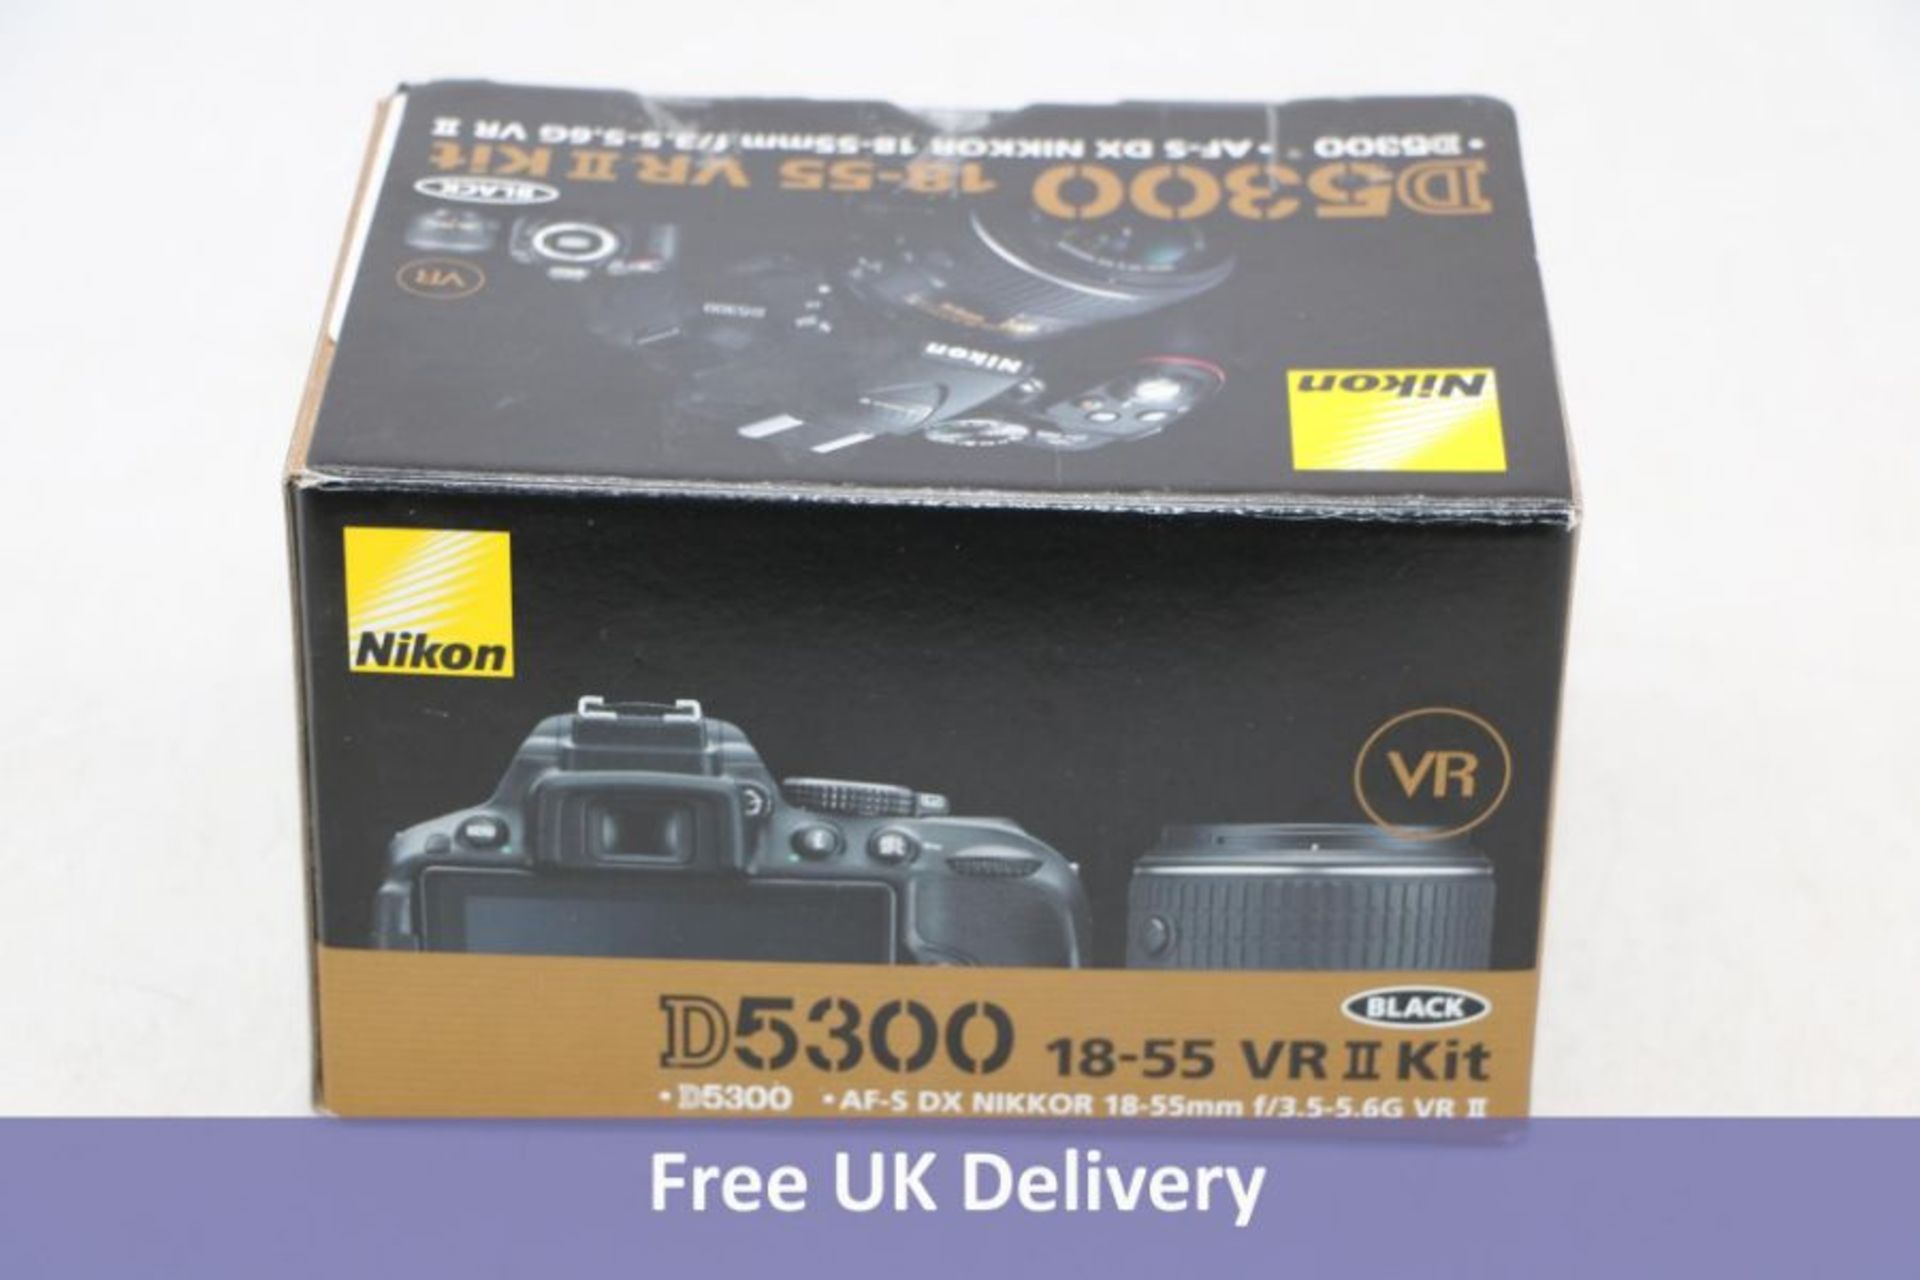 Nikon D5300 24.2 MP CMOS Digital SLR Camera with 18-55mm f/3.5-5.6G ED VR Auto Focus Zoom Lens, Blac